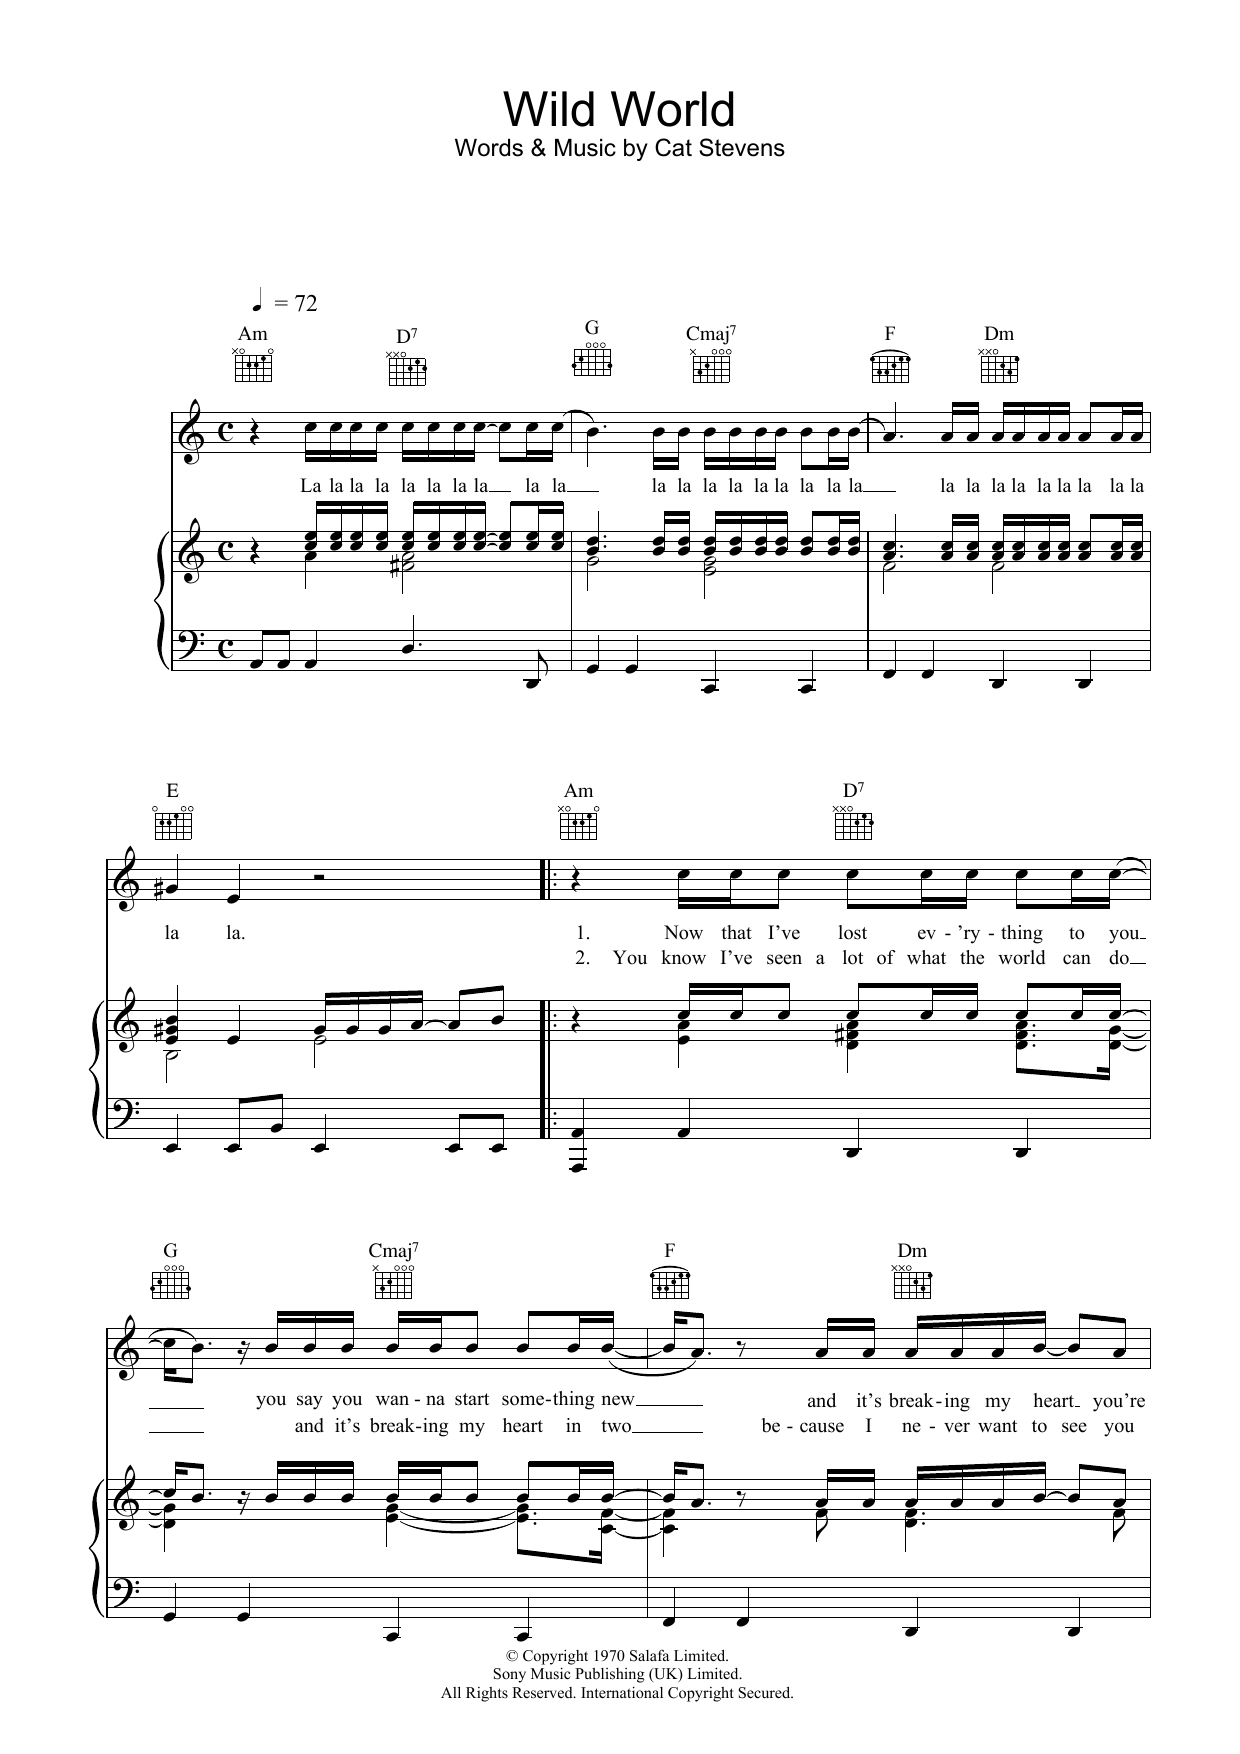 Cat Stevens Wild World Sheet Music Notes & Chords for Ukulele with strumming patterns - Download or Print PDF